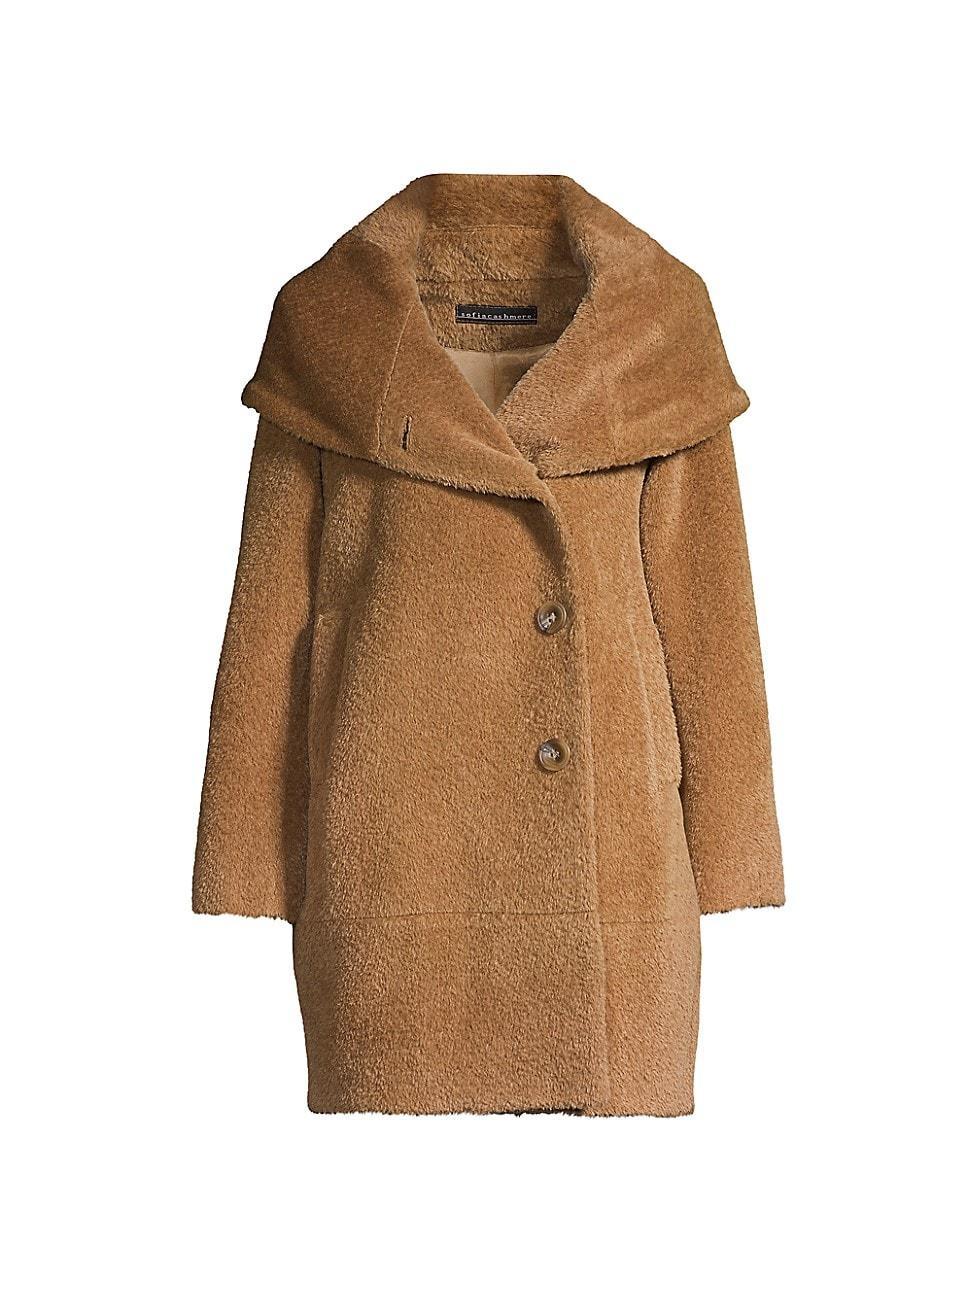 Sofia Cashmere Cocoon Wool & Alpaca Blend Boucl Coat Product Image